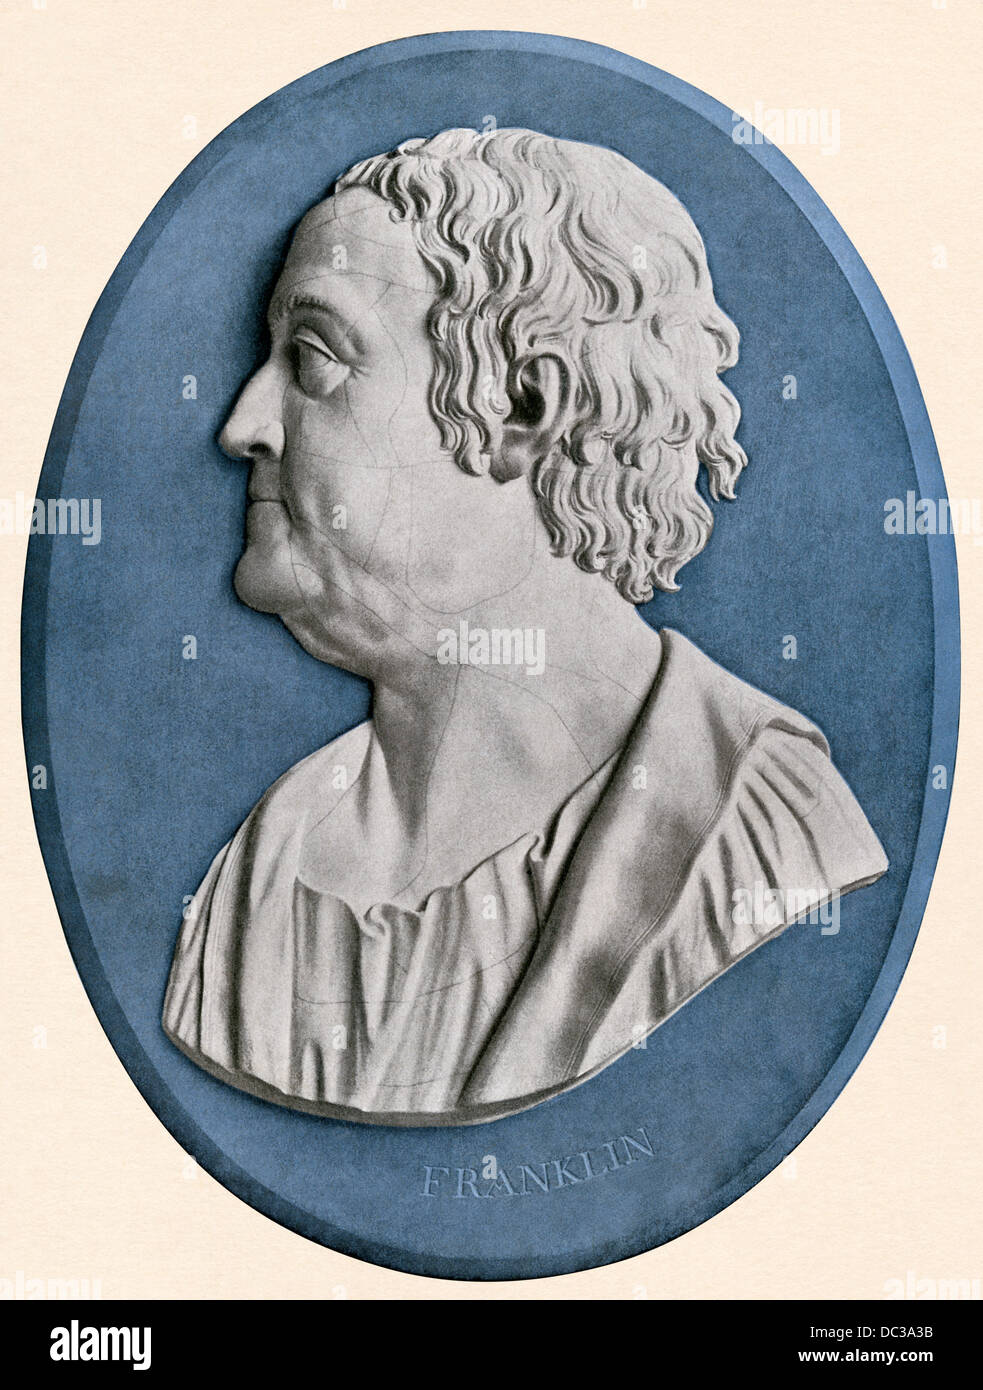 Benjamin Franklin Profil auf einem Wedgewood Medaillon von John flaxman. Farblithographie Reproduktion Stockfoto